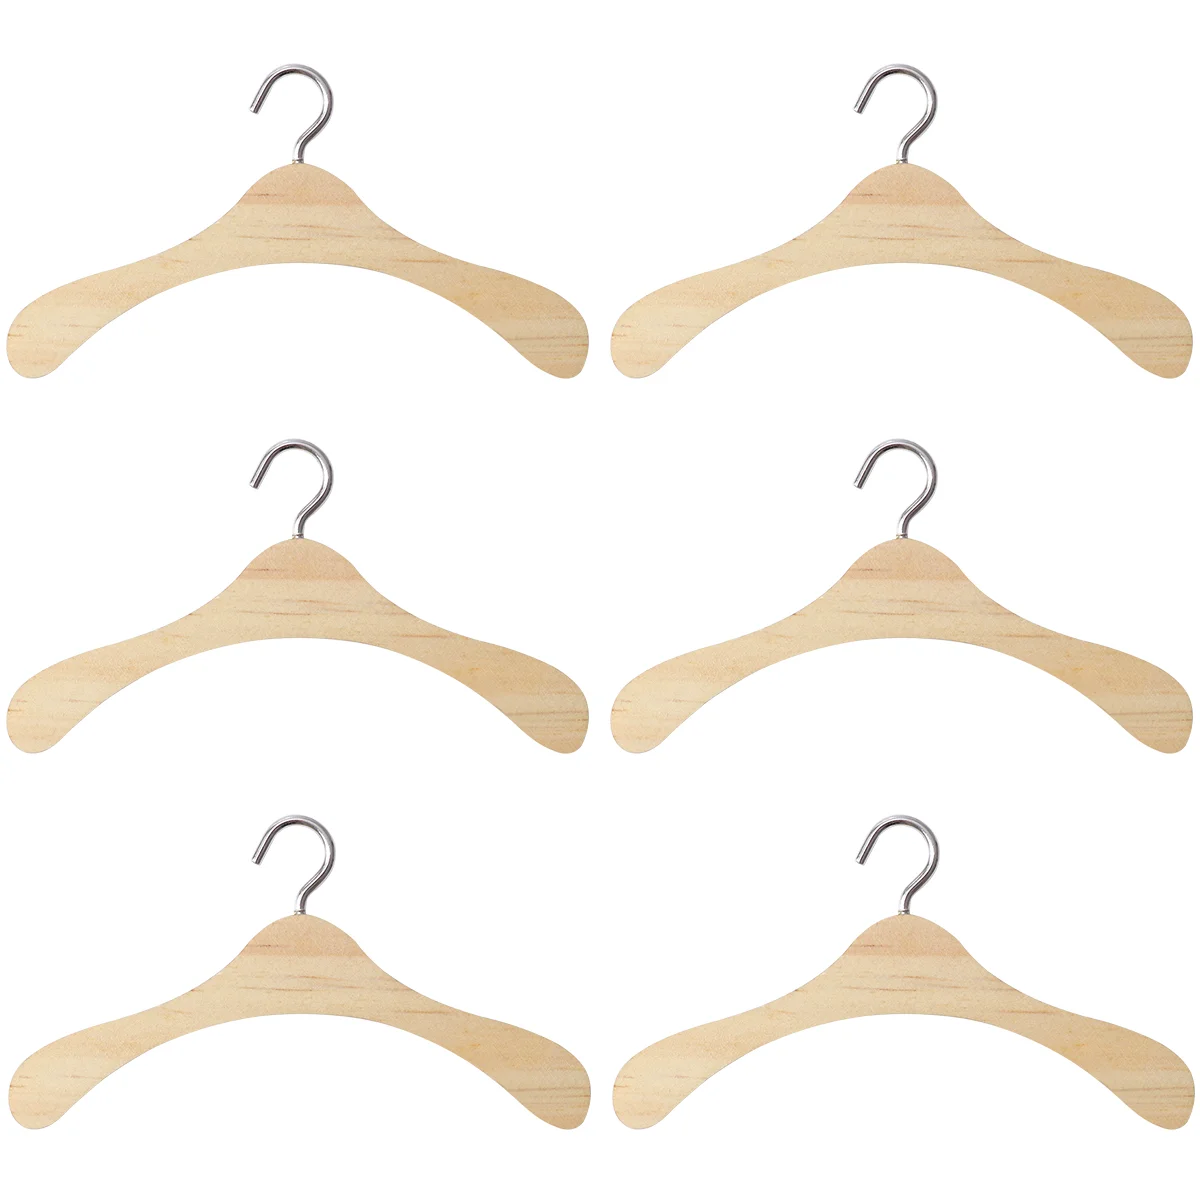 

BESTOMZ 10pcs 1/3 BJD Dolls Accessory Wooden Clothes Hanger